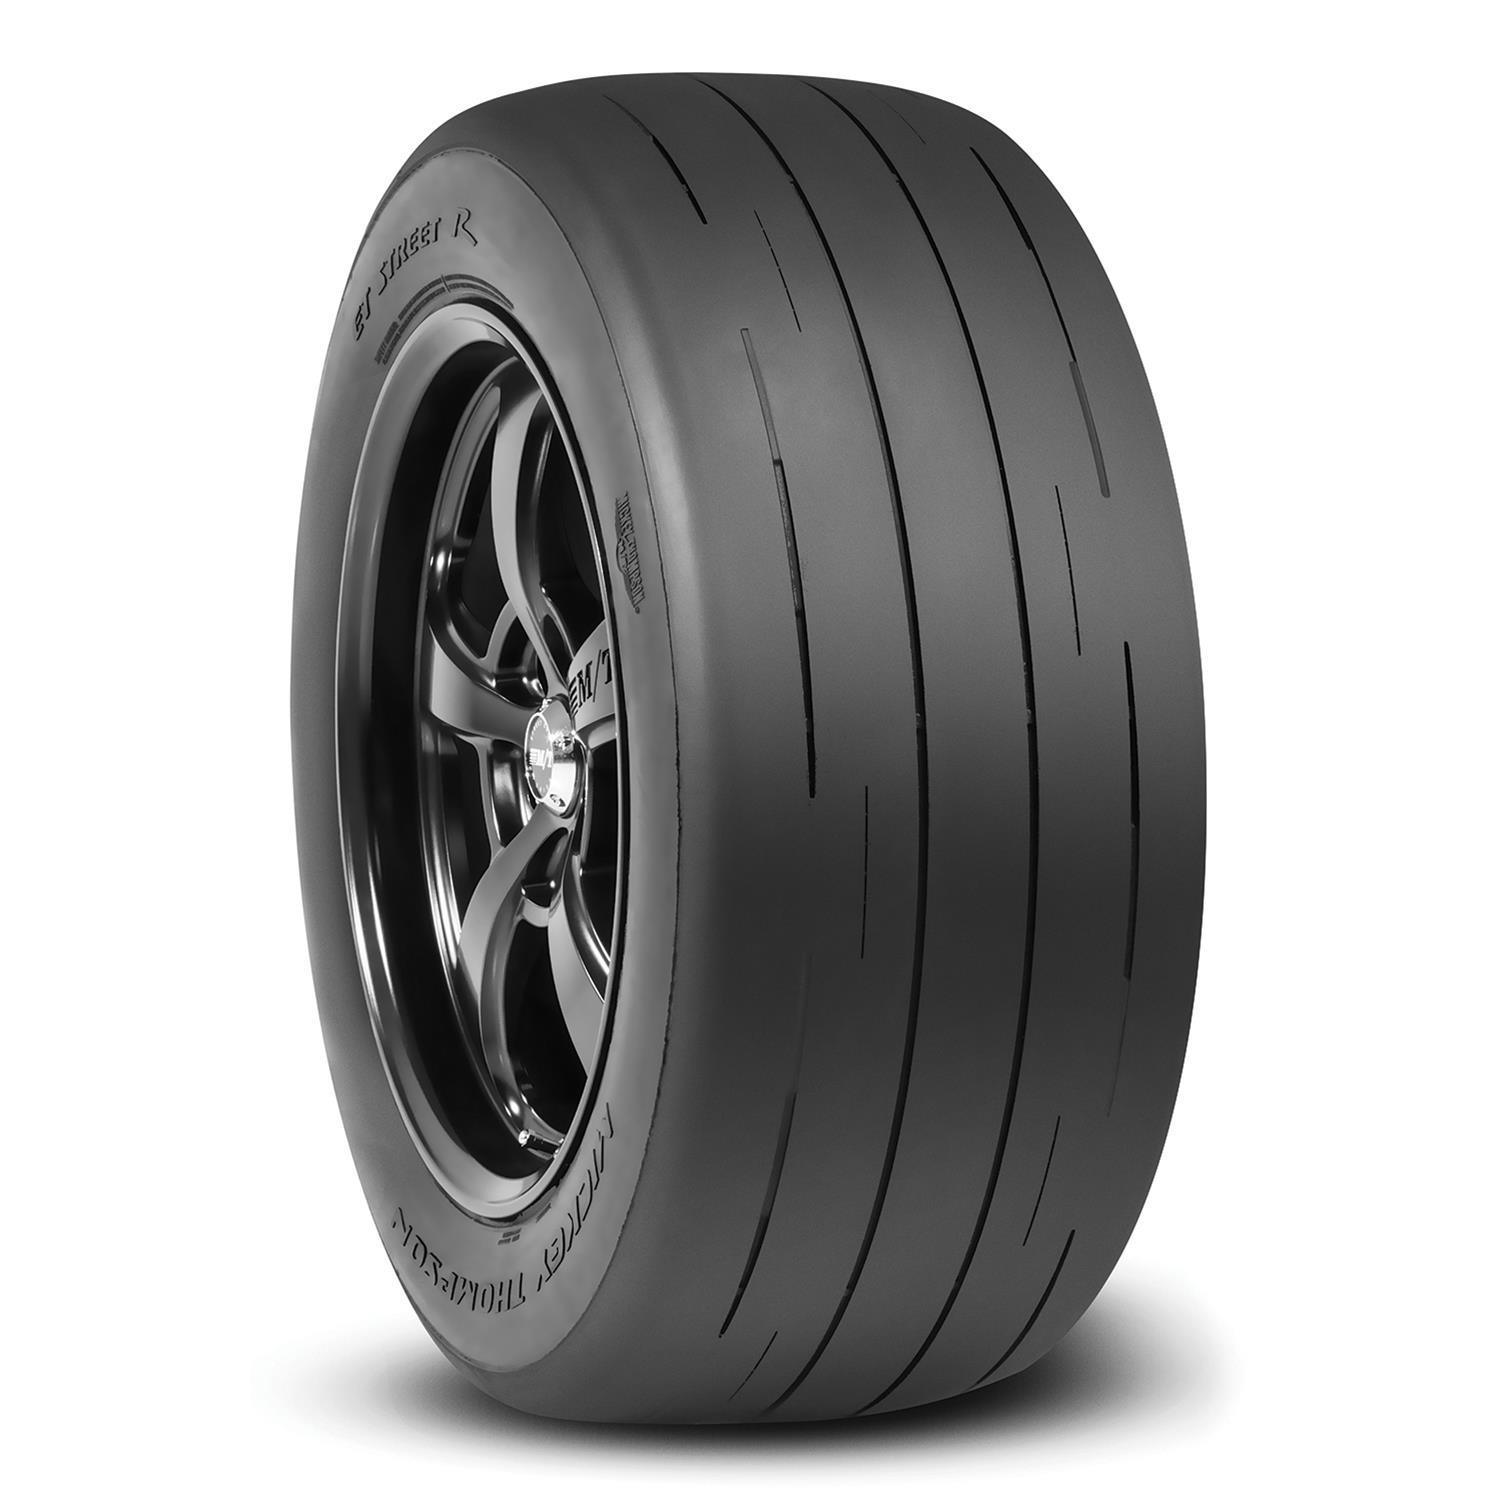 P255/60R15 ET Street R Tire - Burlile Performance Products